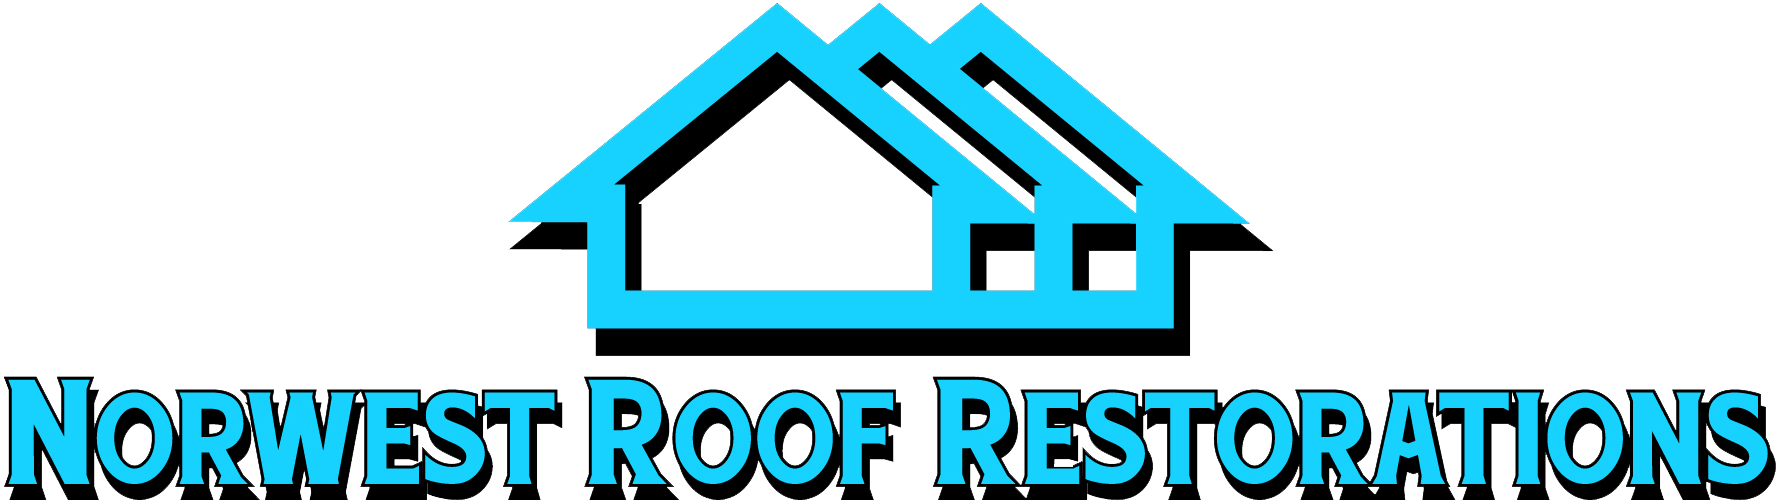 Norwest Roof Restorations